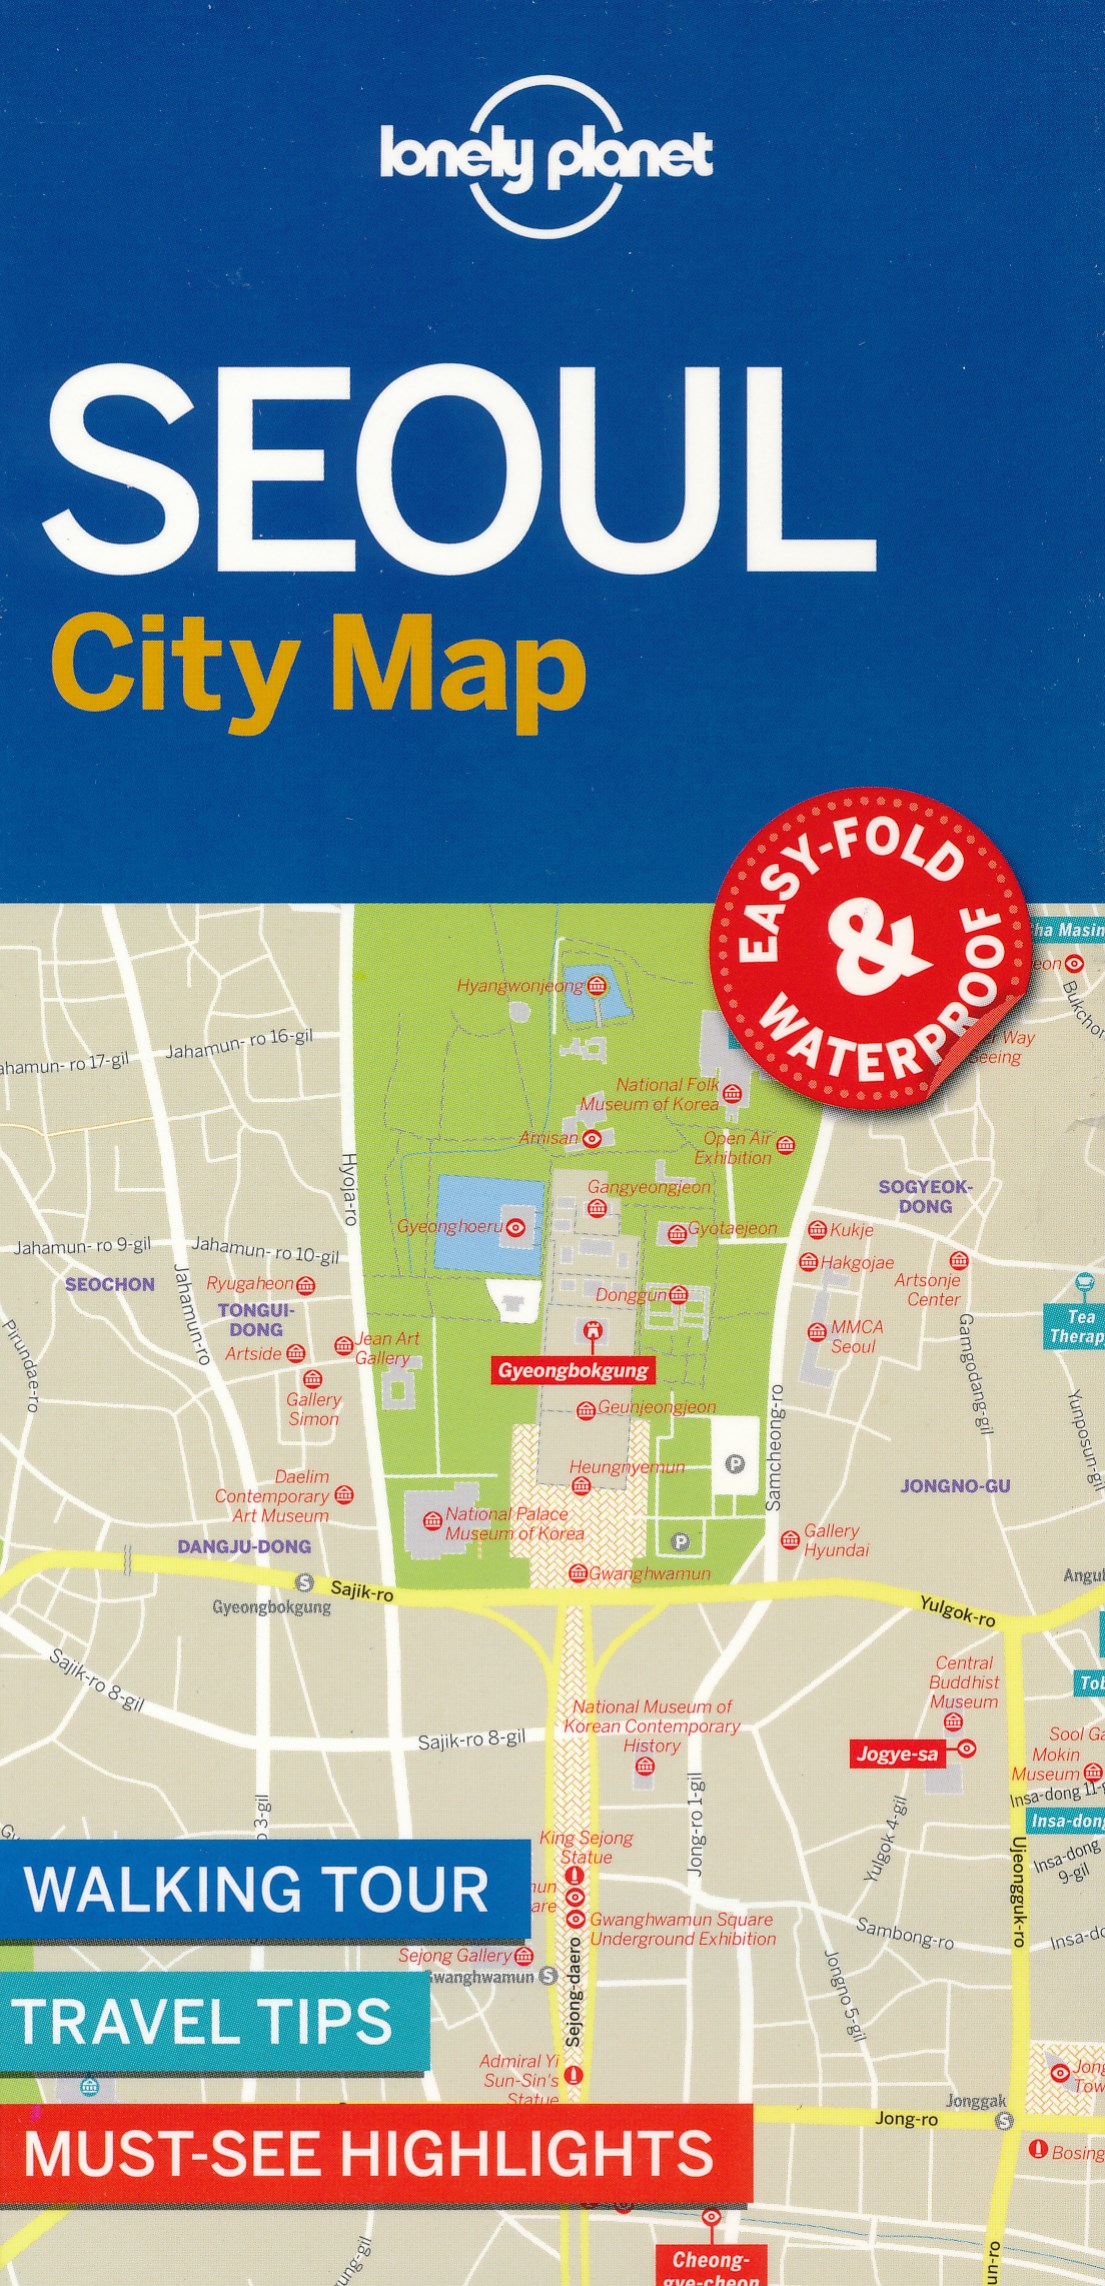 Online bestellen: Stadsplattegrond City map Seoul | Lonely Planet